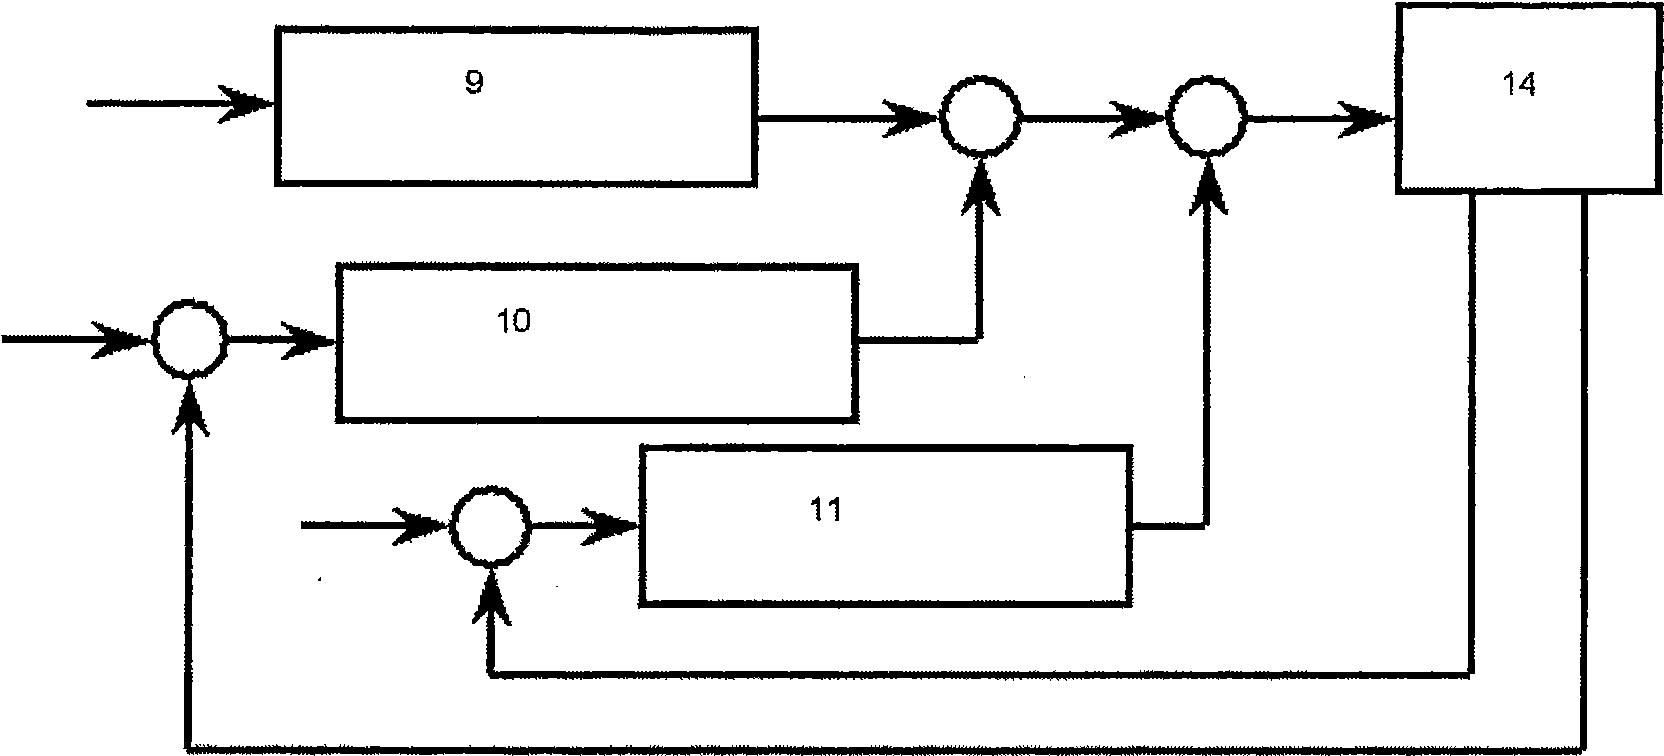 Method for reducing loads in an aerogenerator